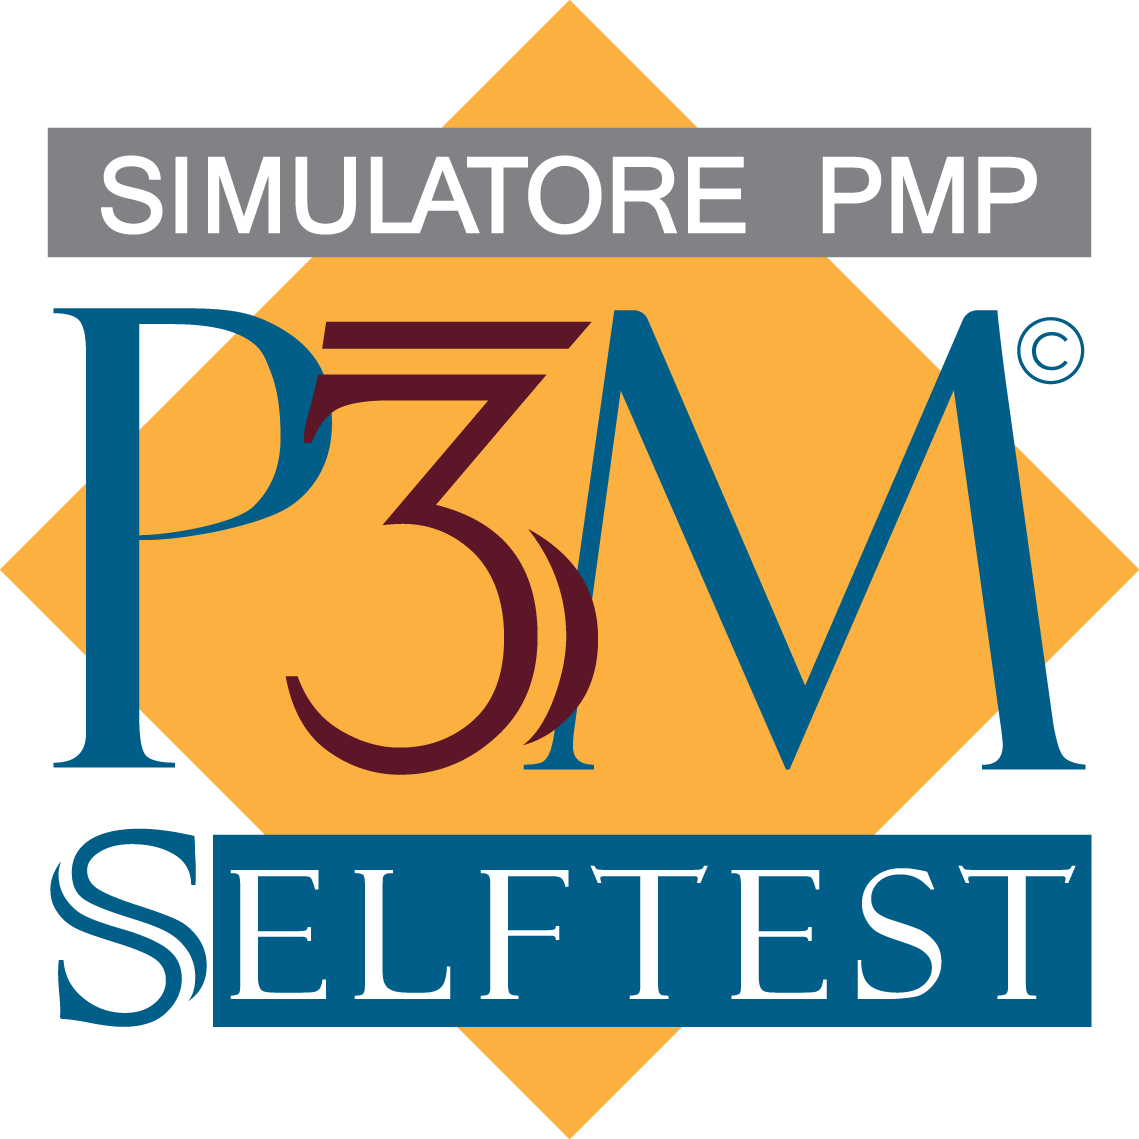 P3MSelftest SimulatorePMP50%